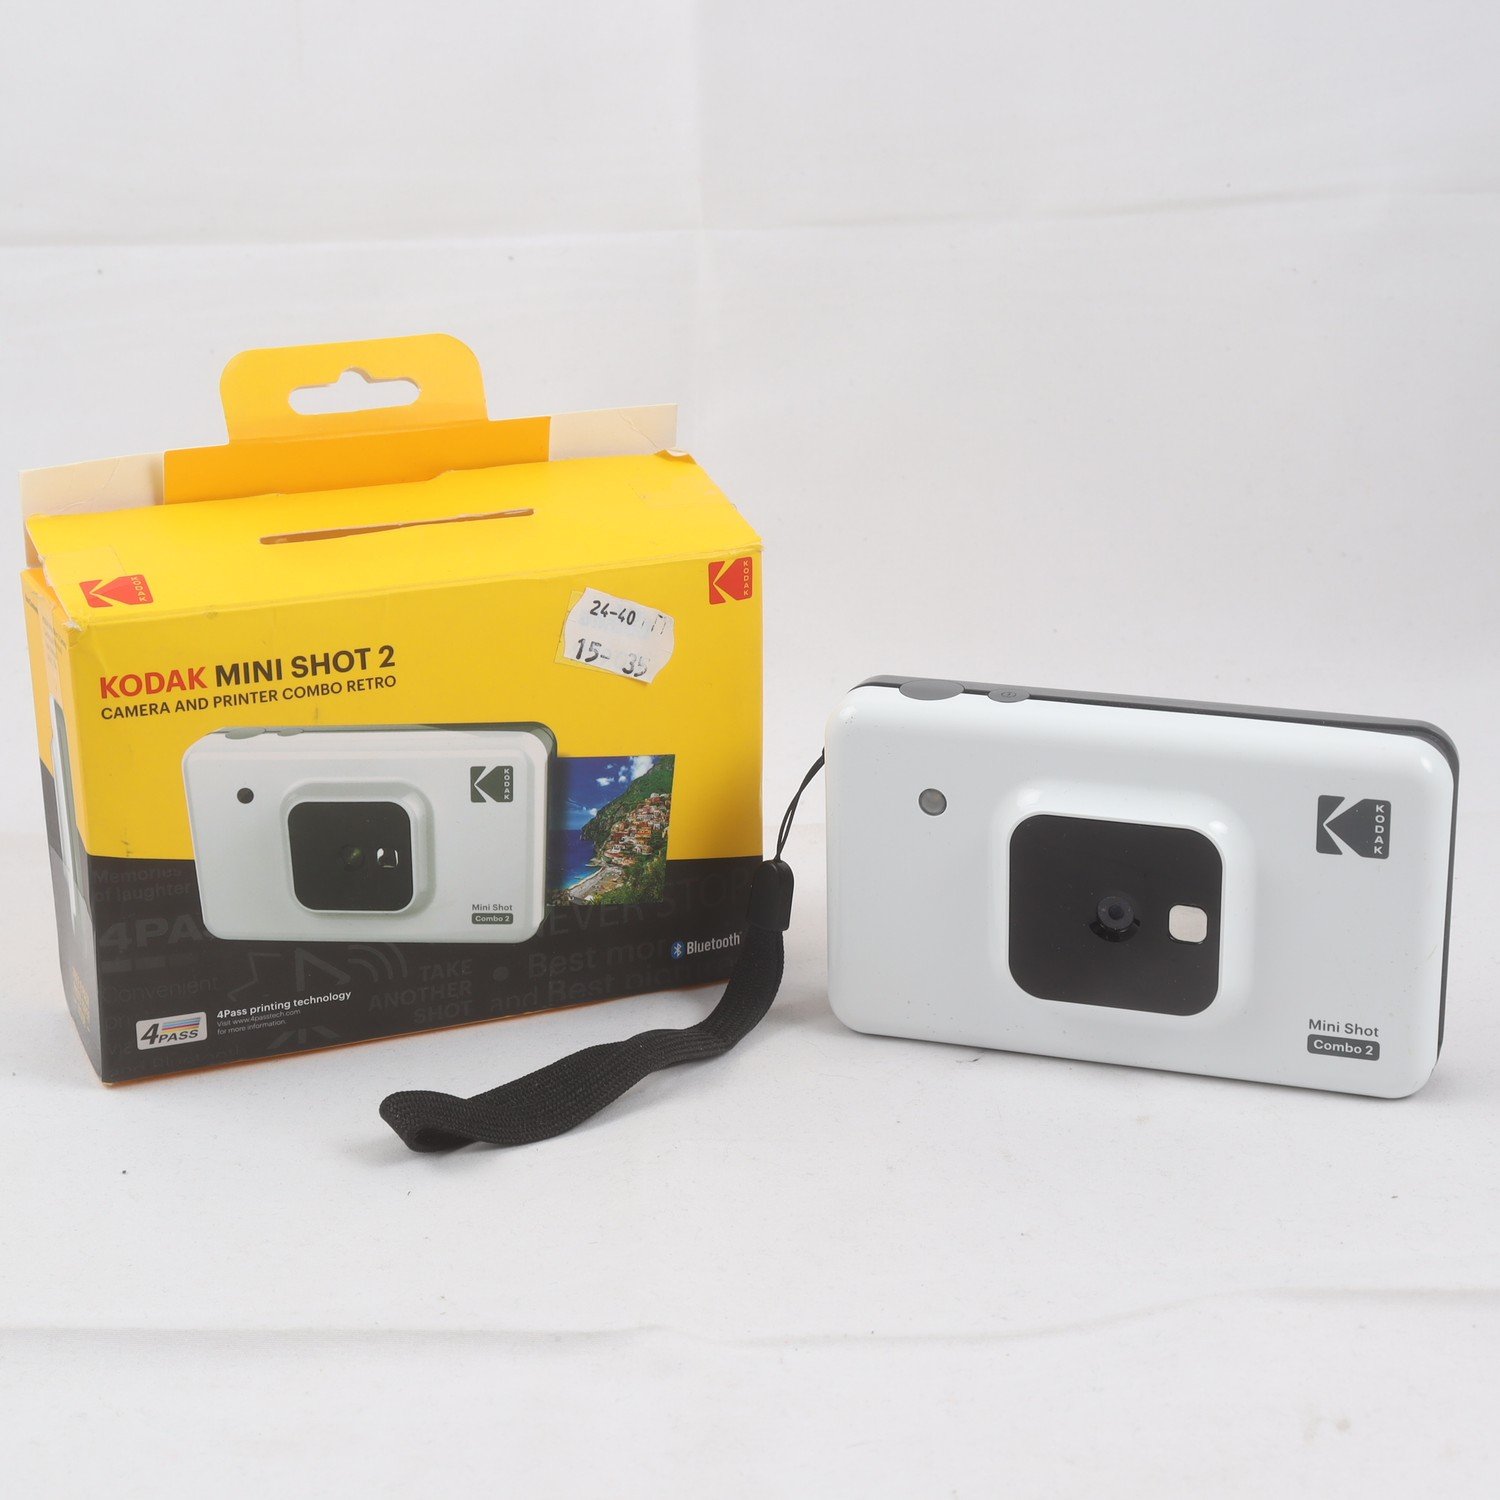 Digitalkamera & printer, Kodax mini shot combo 2